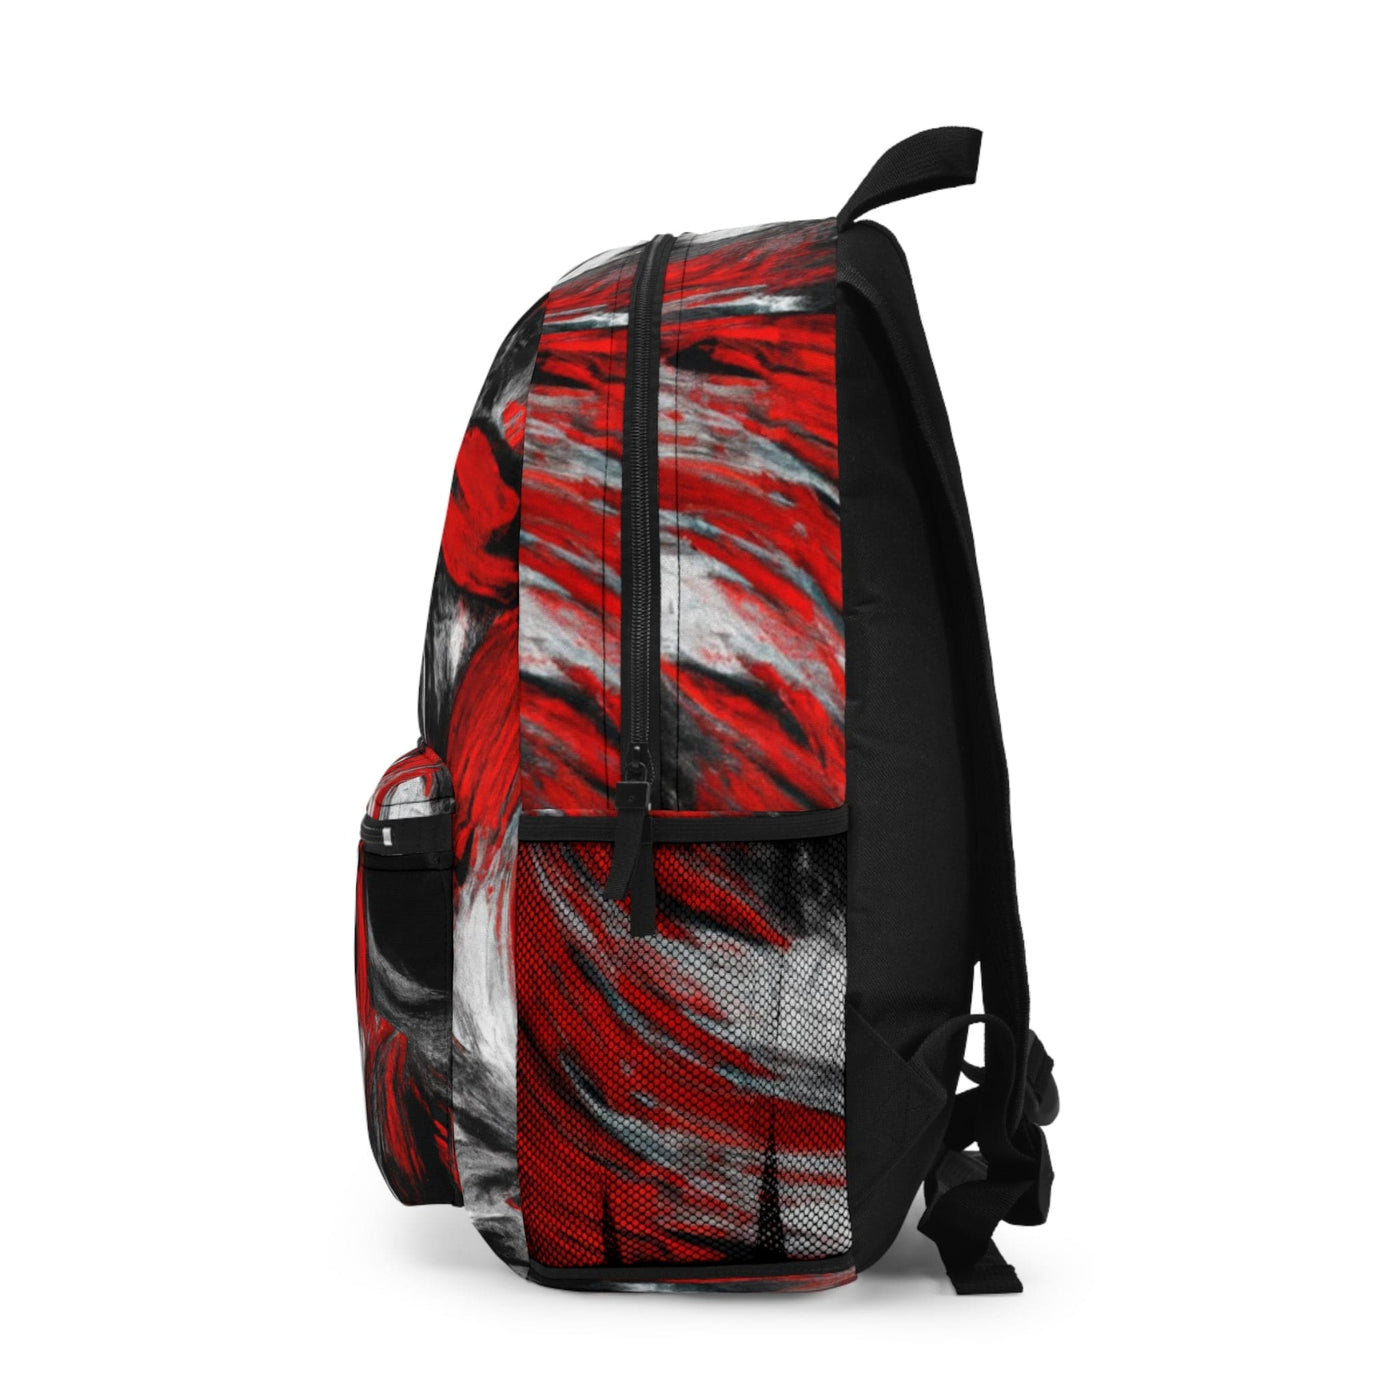 Backpack Work/school/leisure - Waterproof Decorative Black Red White Abstract